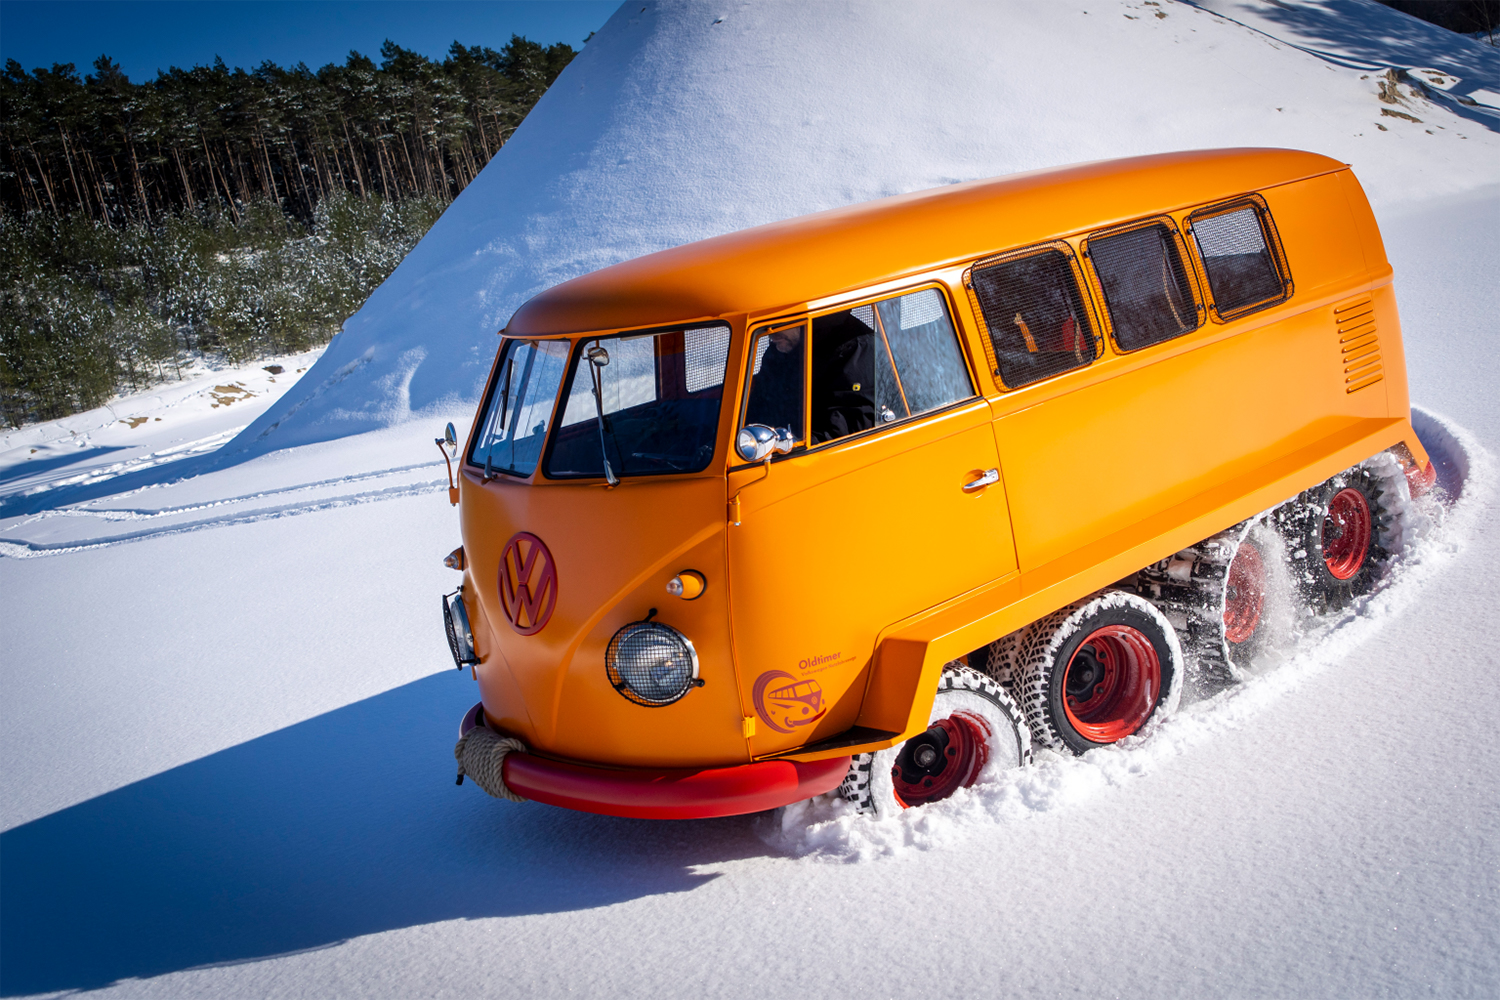 Vulkanisch Vertellen Beheer The Ultimate VW Bus: The Mountain-Ready Half-Track Fox - InsideHook